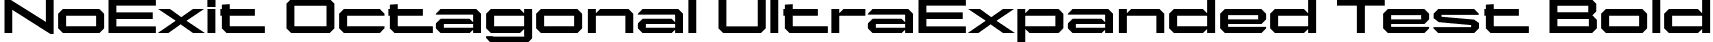 NoExit Octagonal UltraExpanded Test Bold font | NoExitOctagonalUltraExpandedTest-Bold.otf